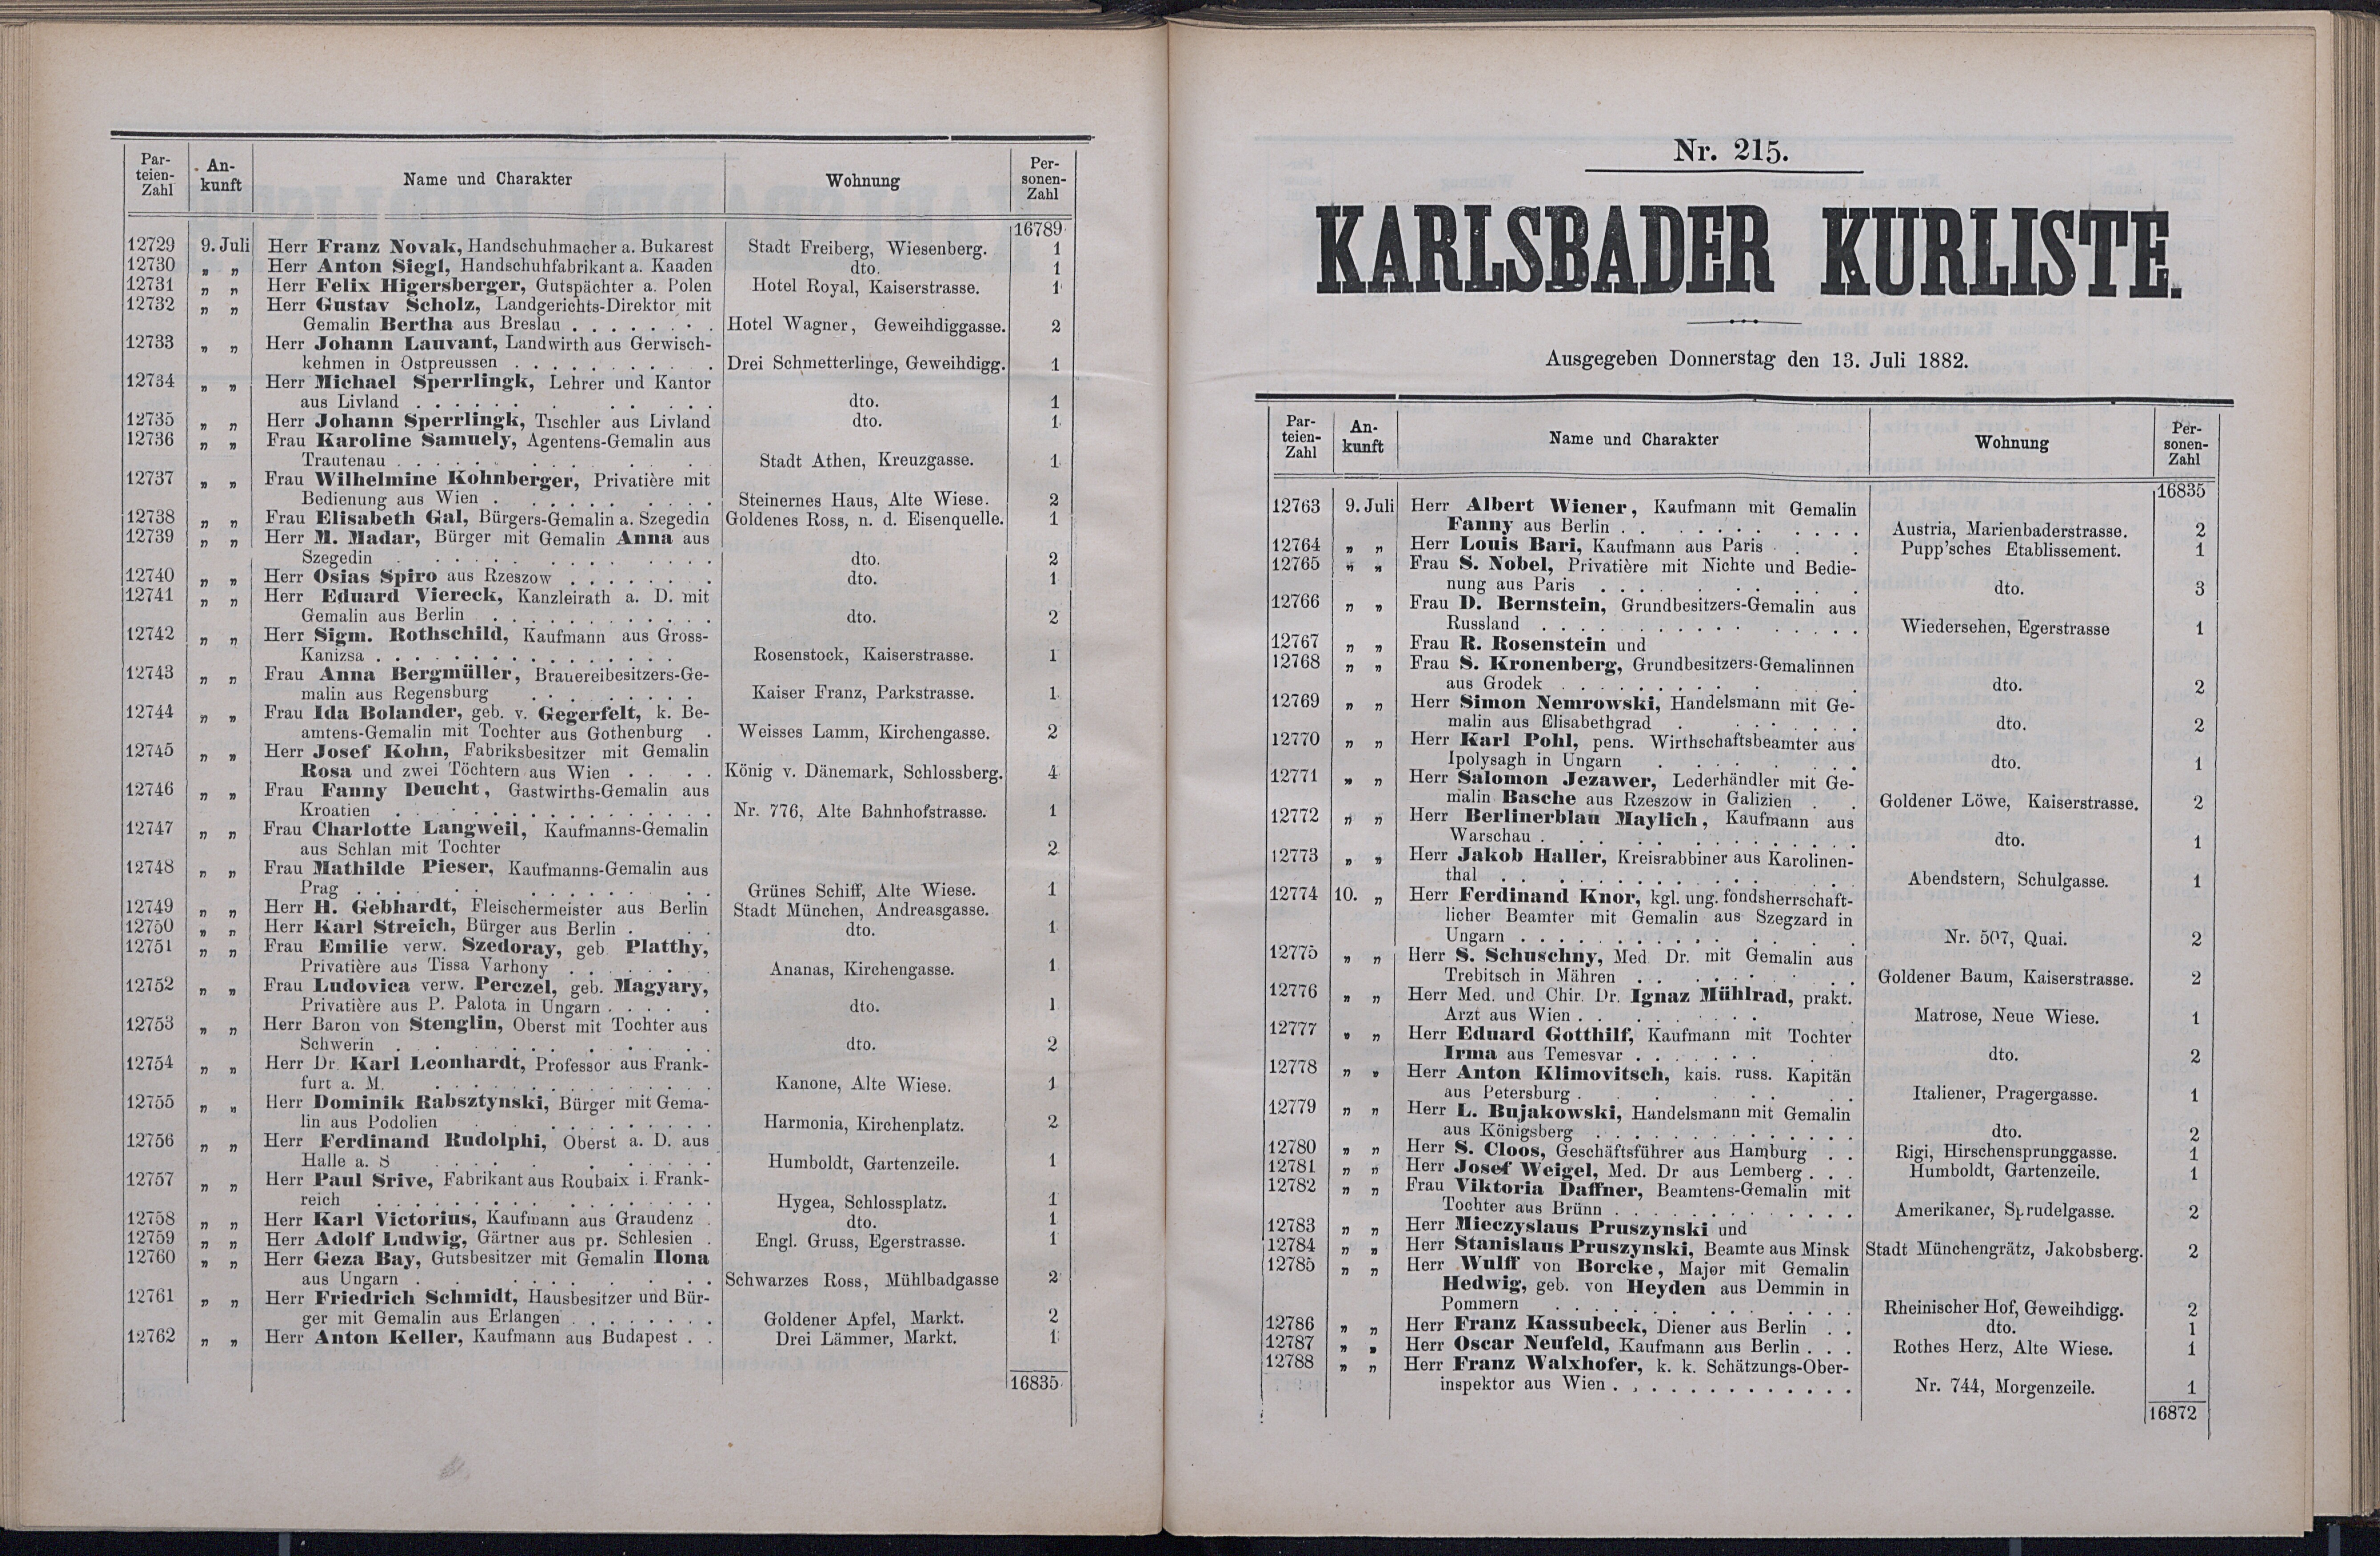 262. soap-kv_knihovna_karlsbader-kurliste-1882_2630